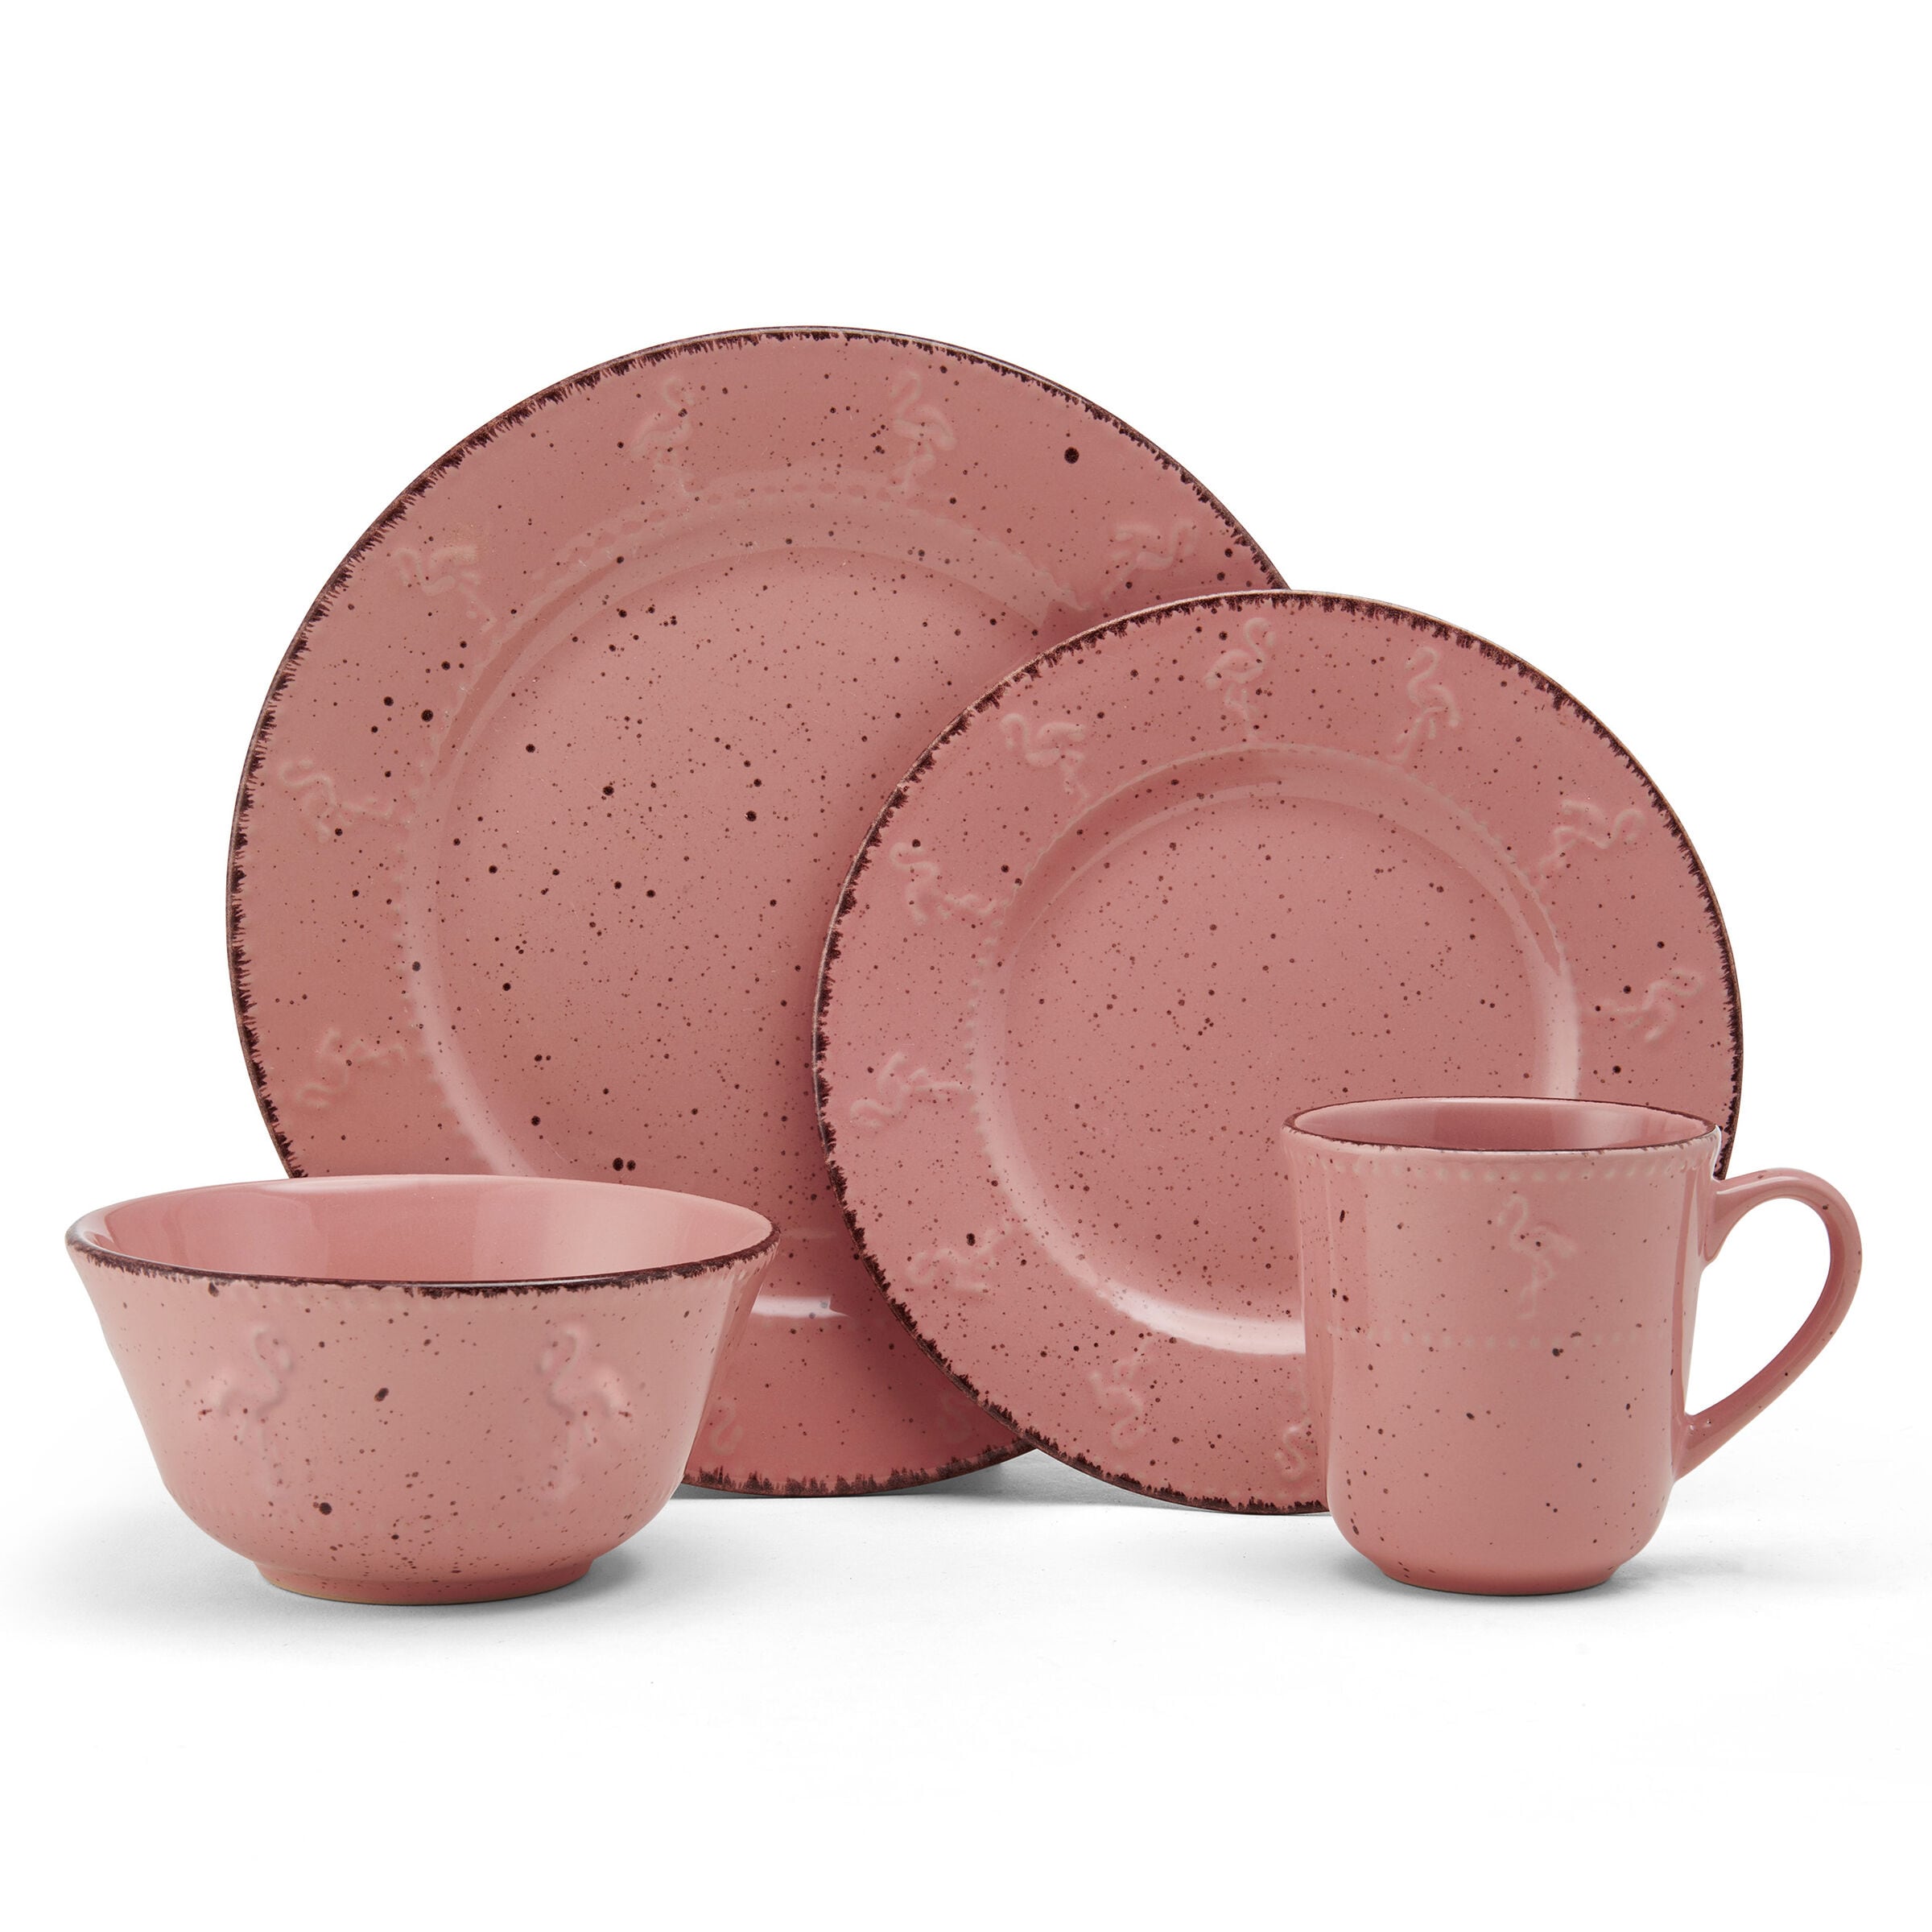 Pfaltzgraff Studio Set of 4 Porcelain Measuring Cups Pink Green